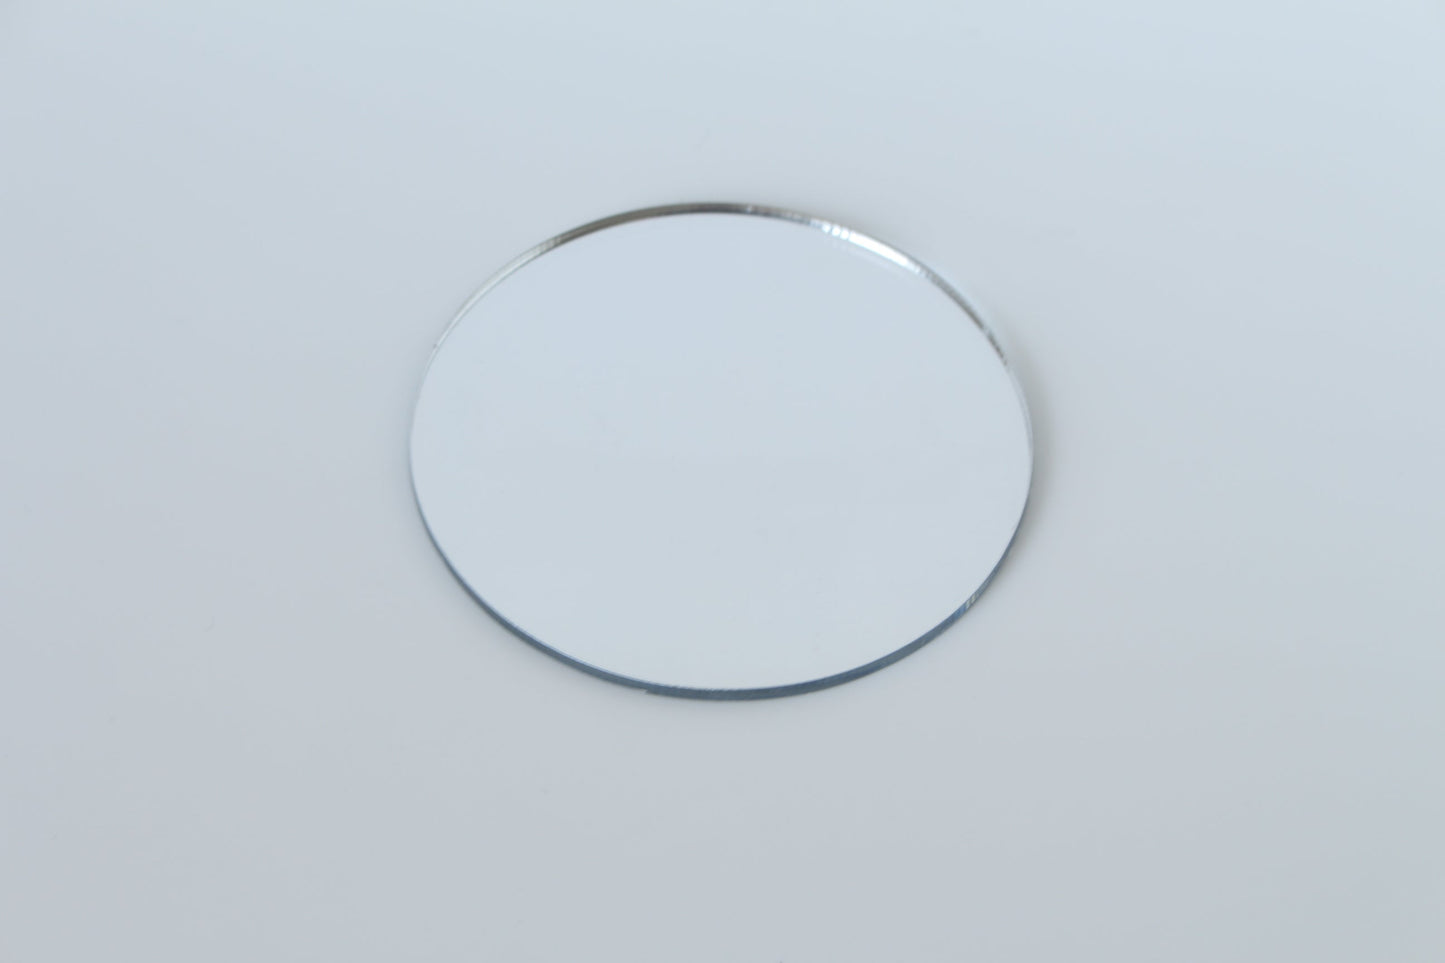 150mm Acrylic Circle